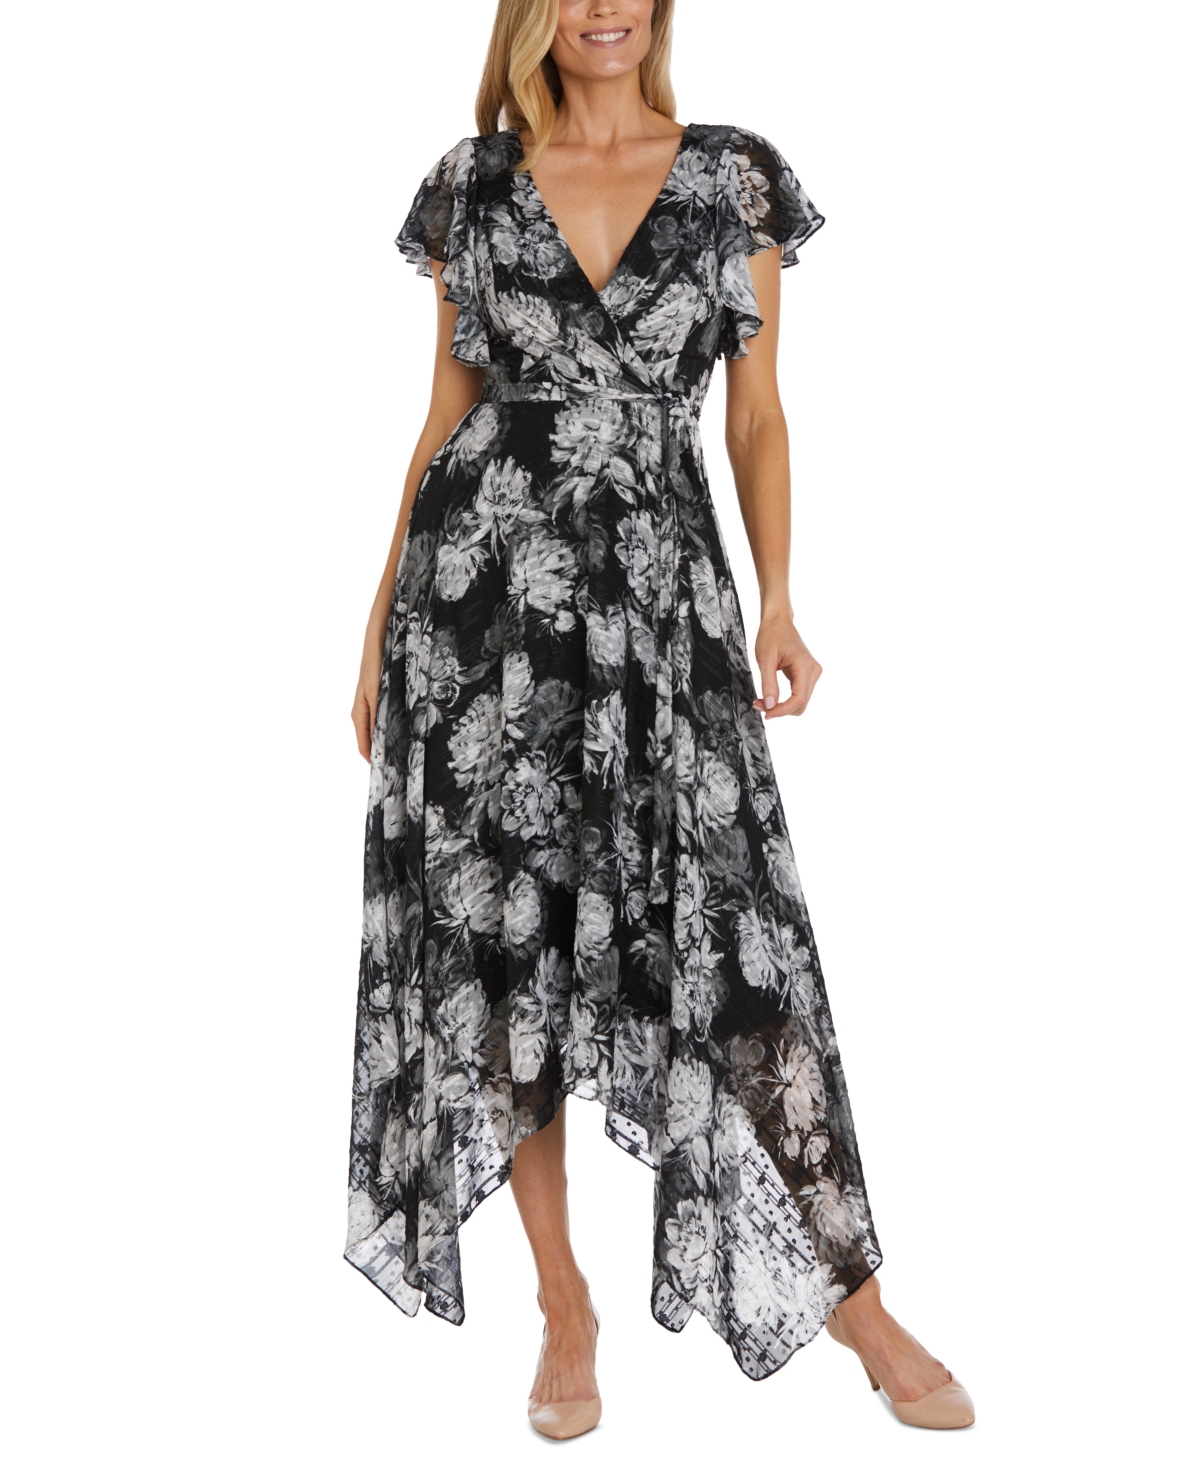 Women's Floral-Print Handkerchief-Hem Wrap Dress - Black/White